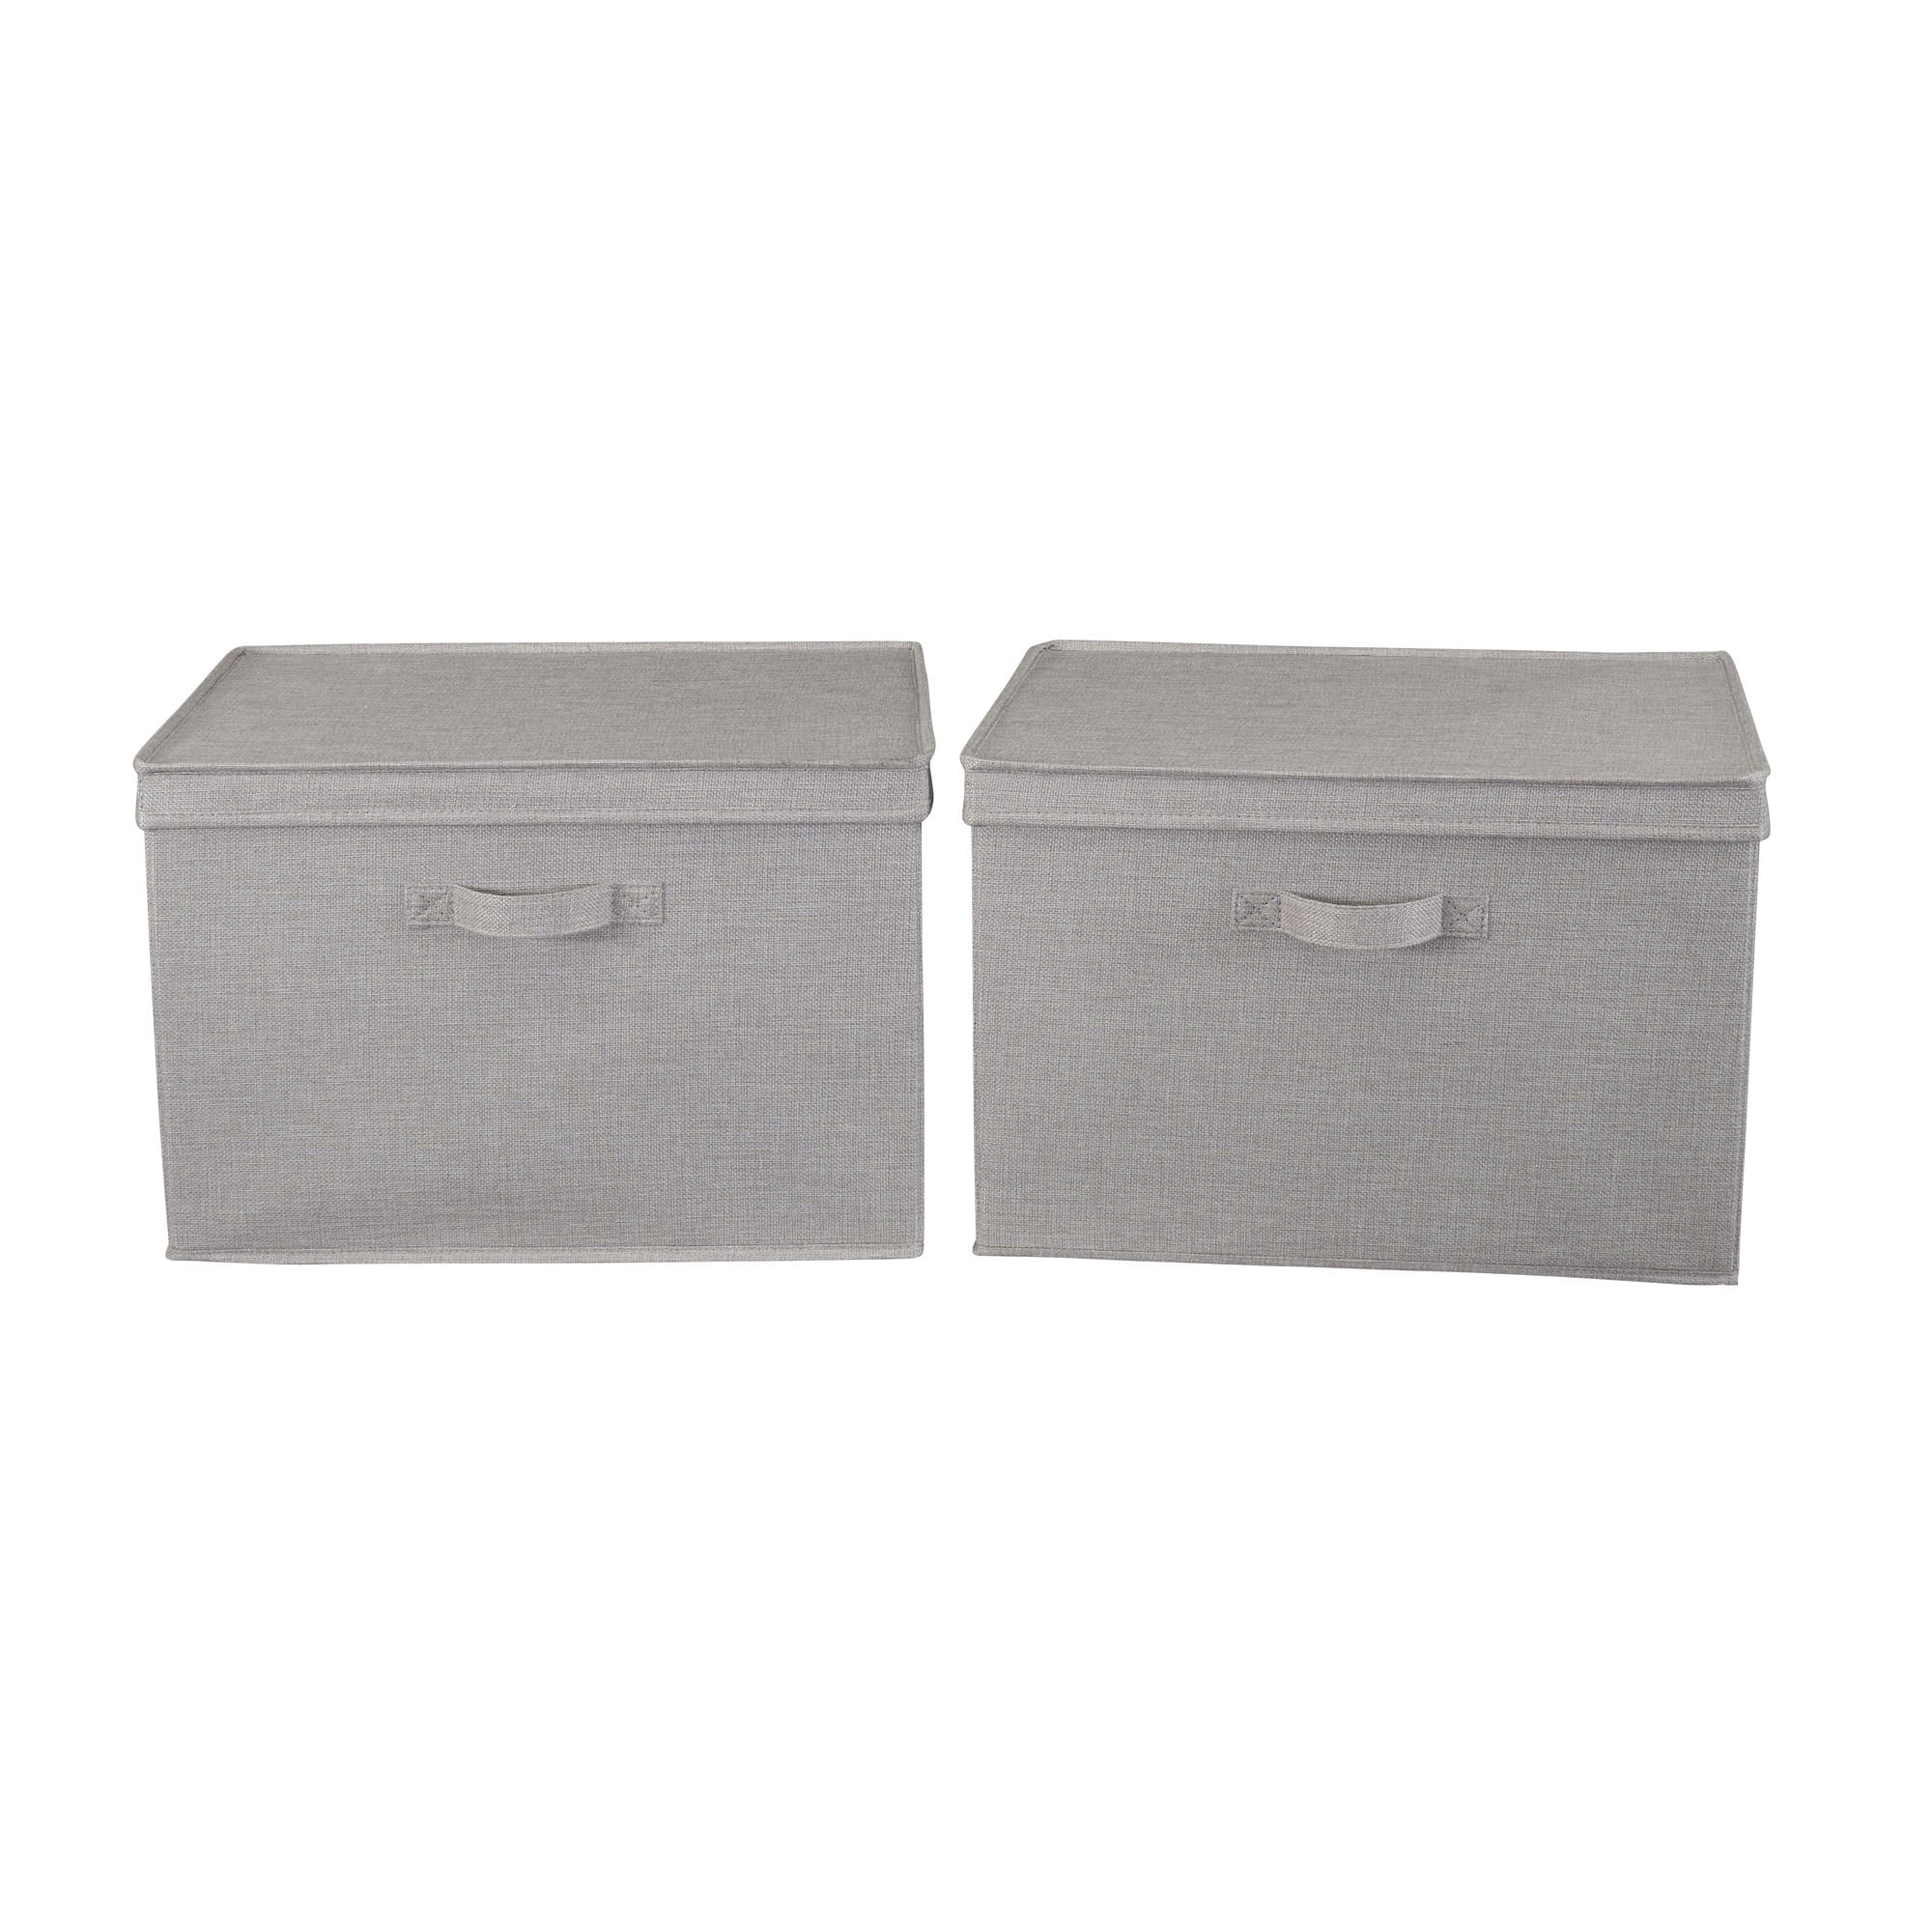 181020 - Cardboard Storage Box with Lid, Standard 2 Inch, 5 1/4 x